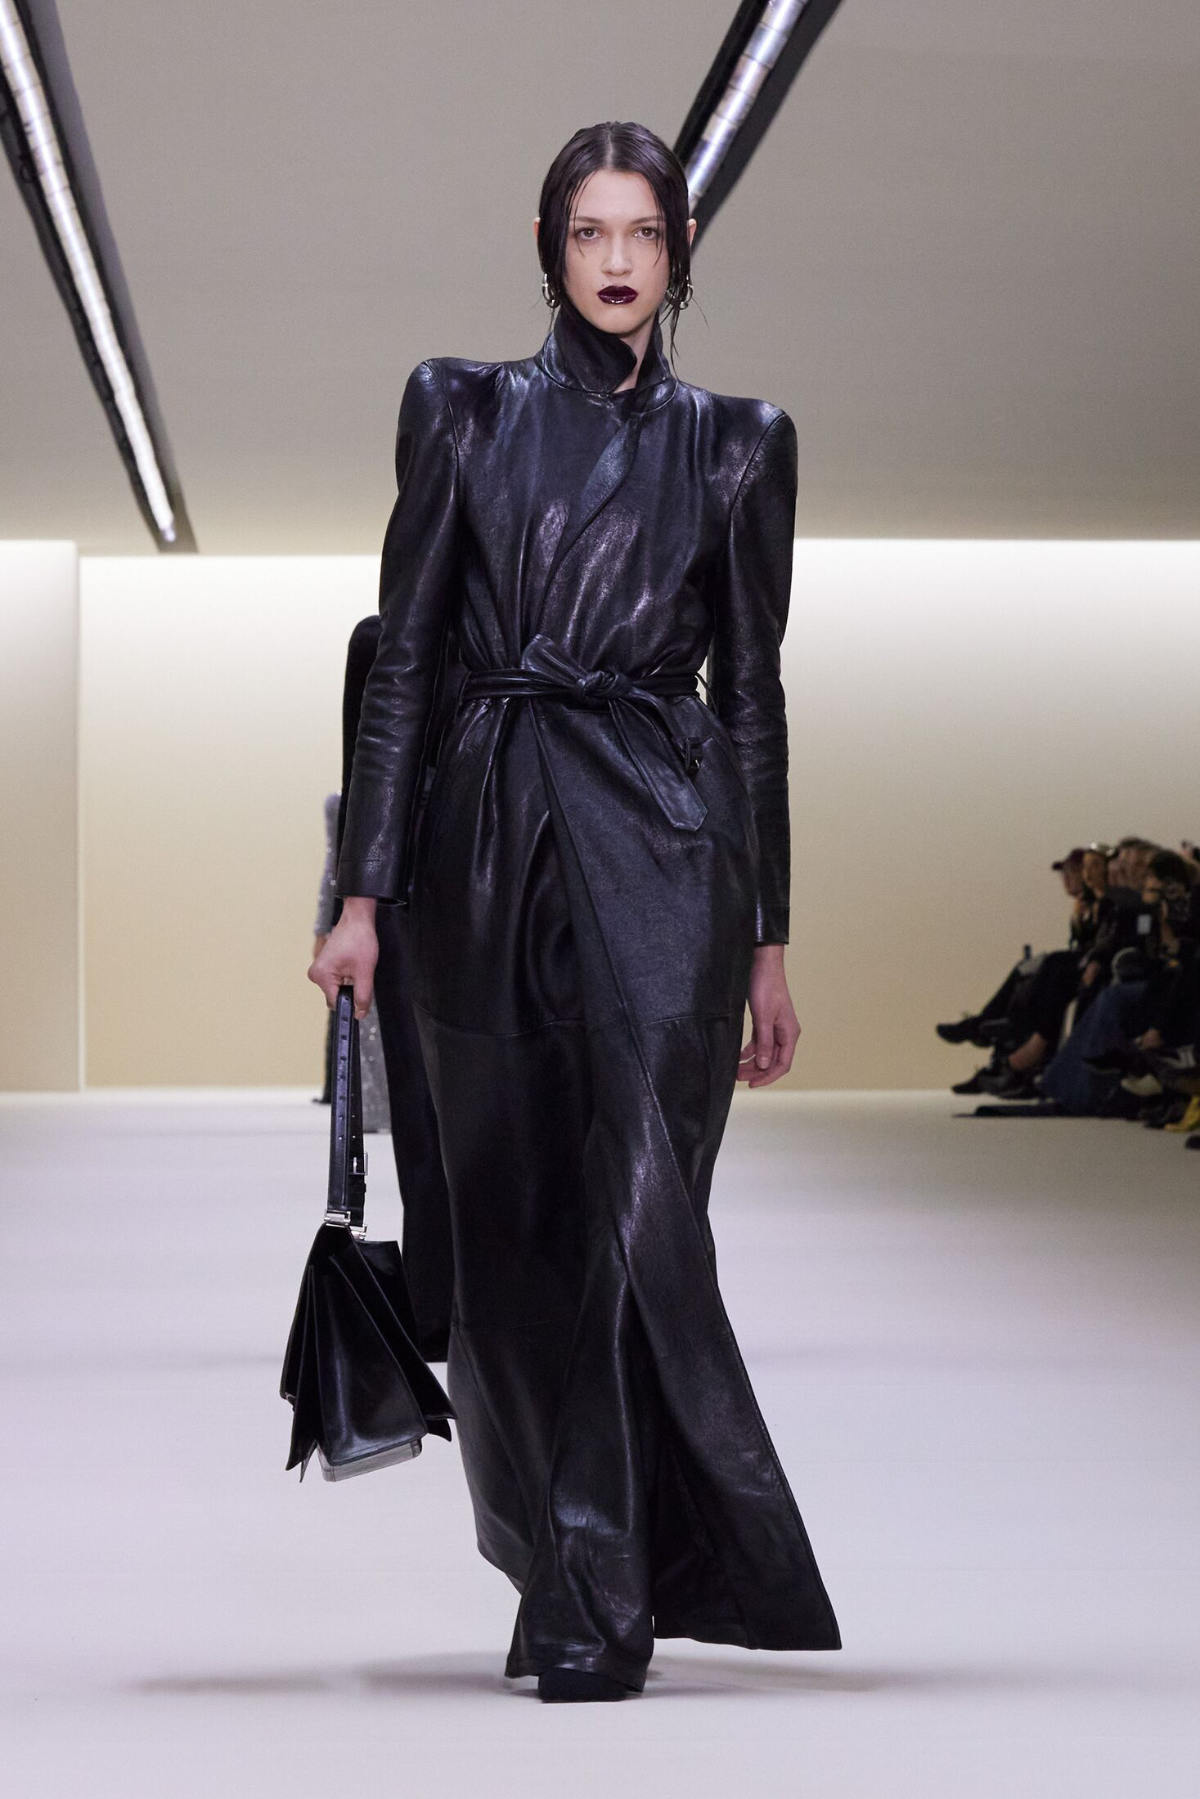 Balenciaga Presents Its New Winter 2023 Collection